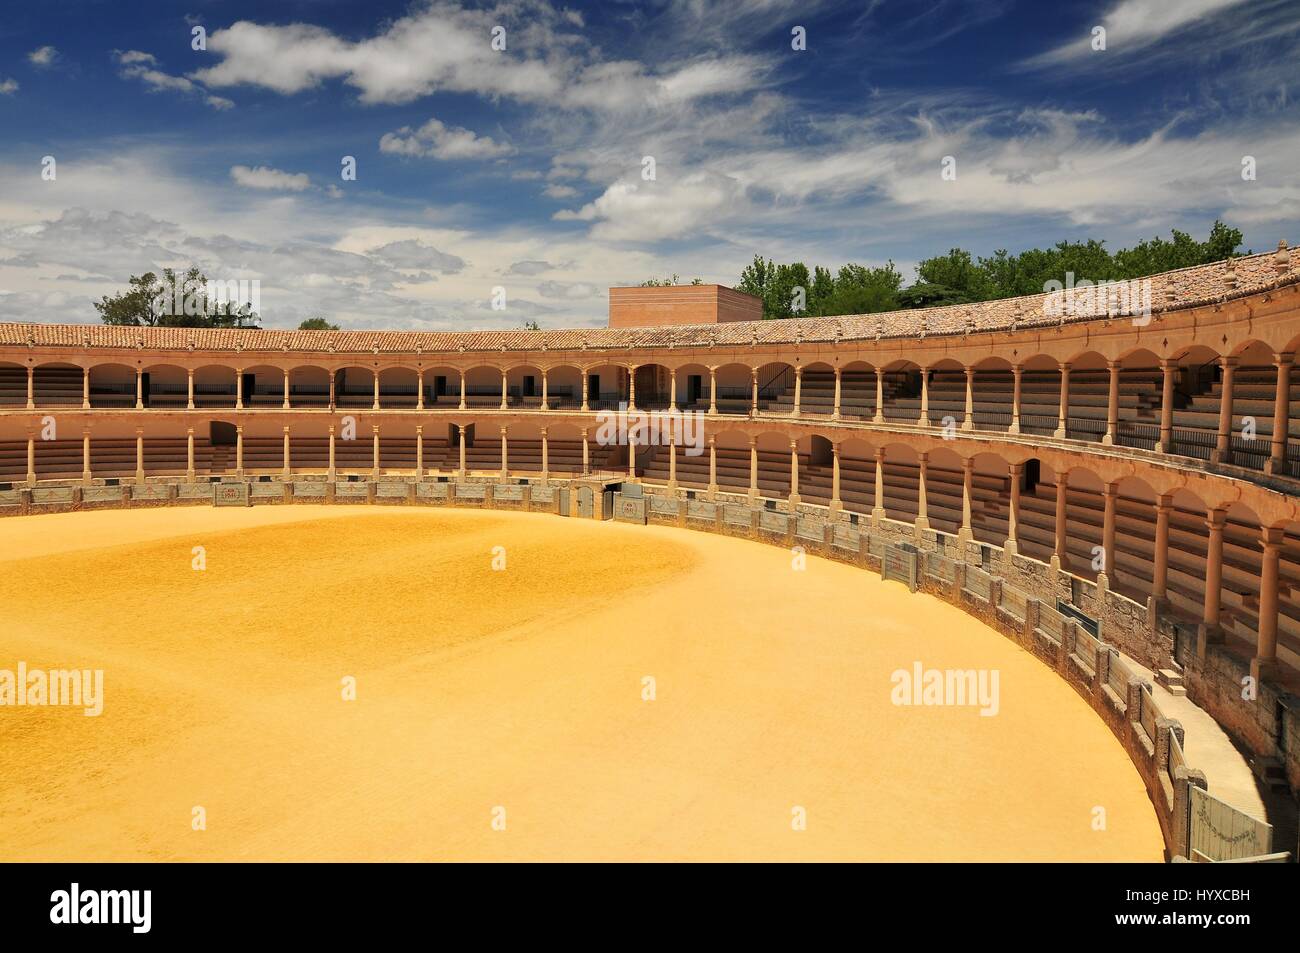 Die 18thC Plaza de Toros (Stierkampfarena), Ronda, Andalusien, Spanien Stockfoto